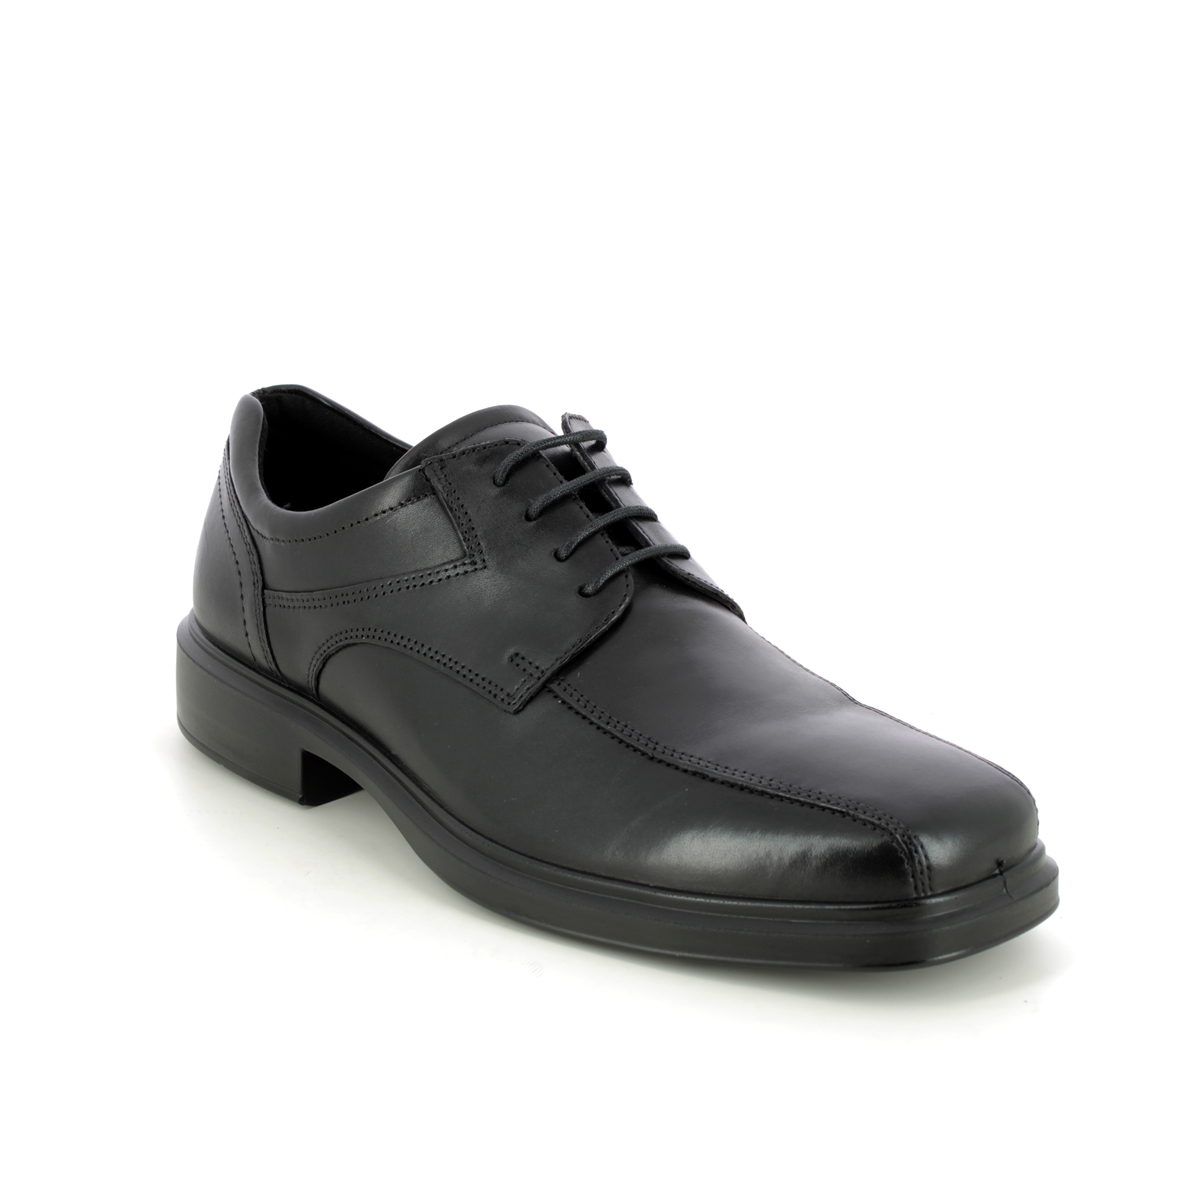 Ecco Helsinki 2 Tram Black Leather Mens Formal Shoes 500174-01001 In Size 41 In Plain Black Leather